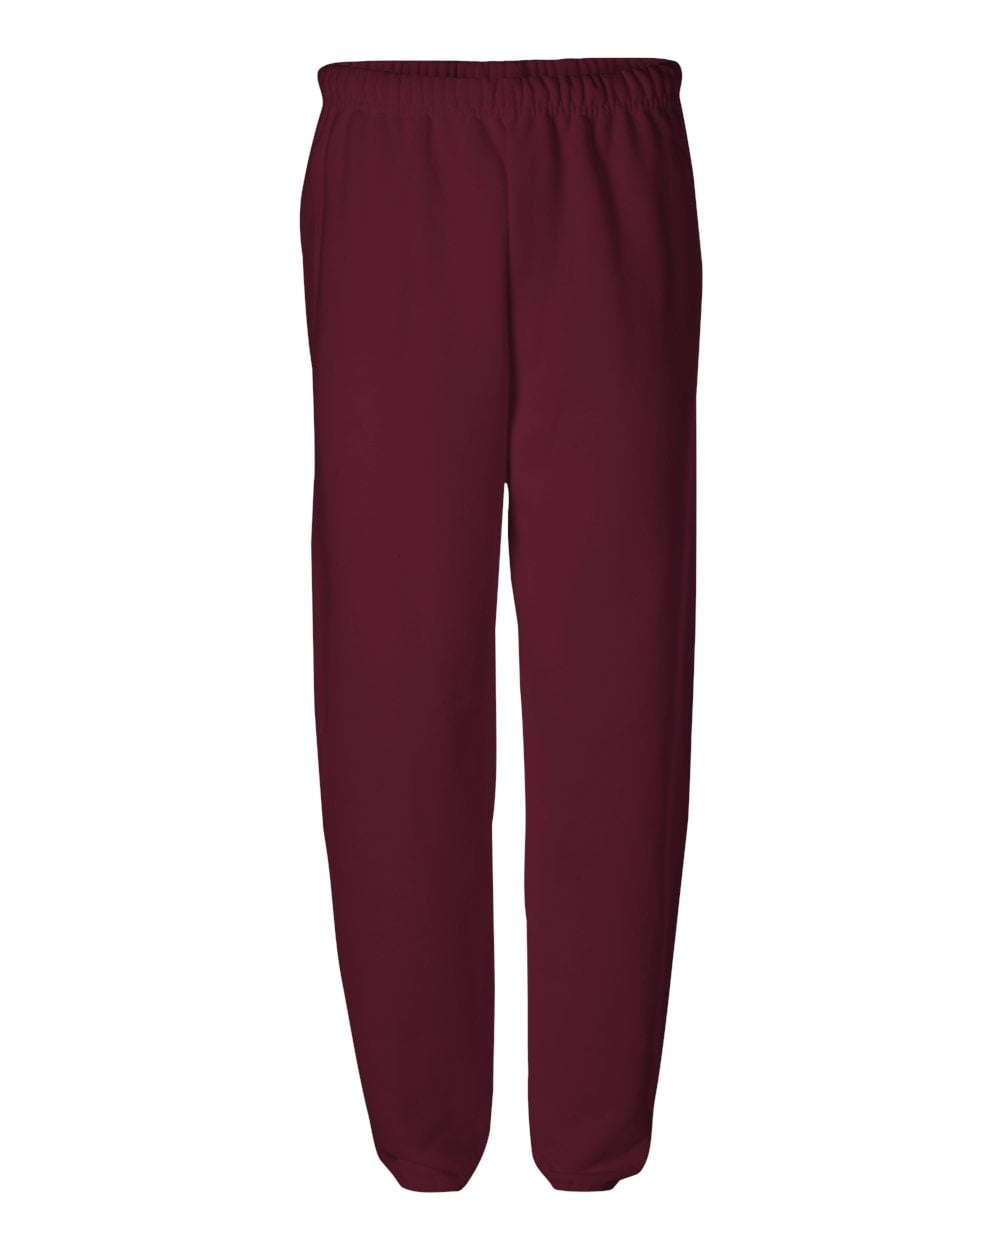 Jerzees NuBlend Sweatpants for Men - Walmart.com